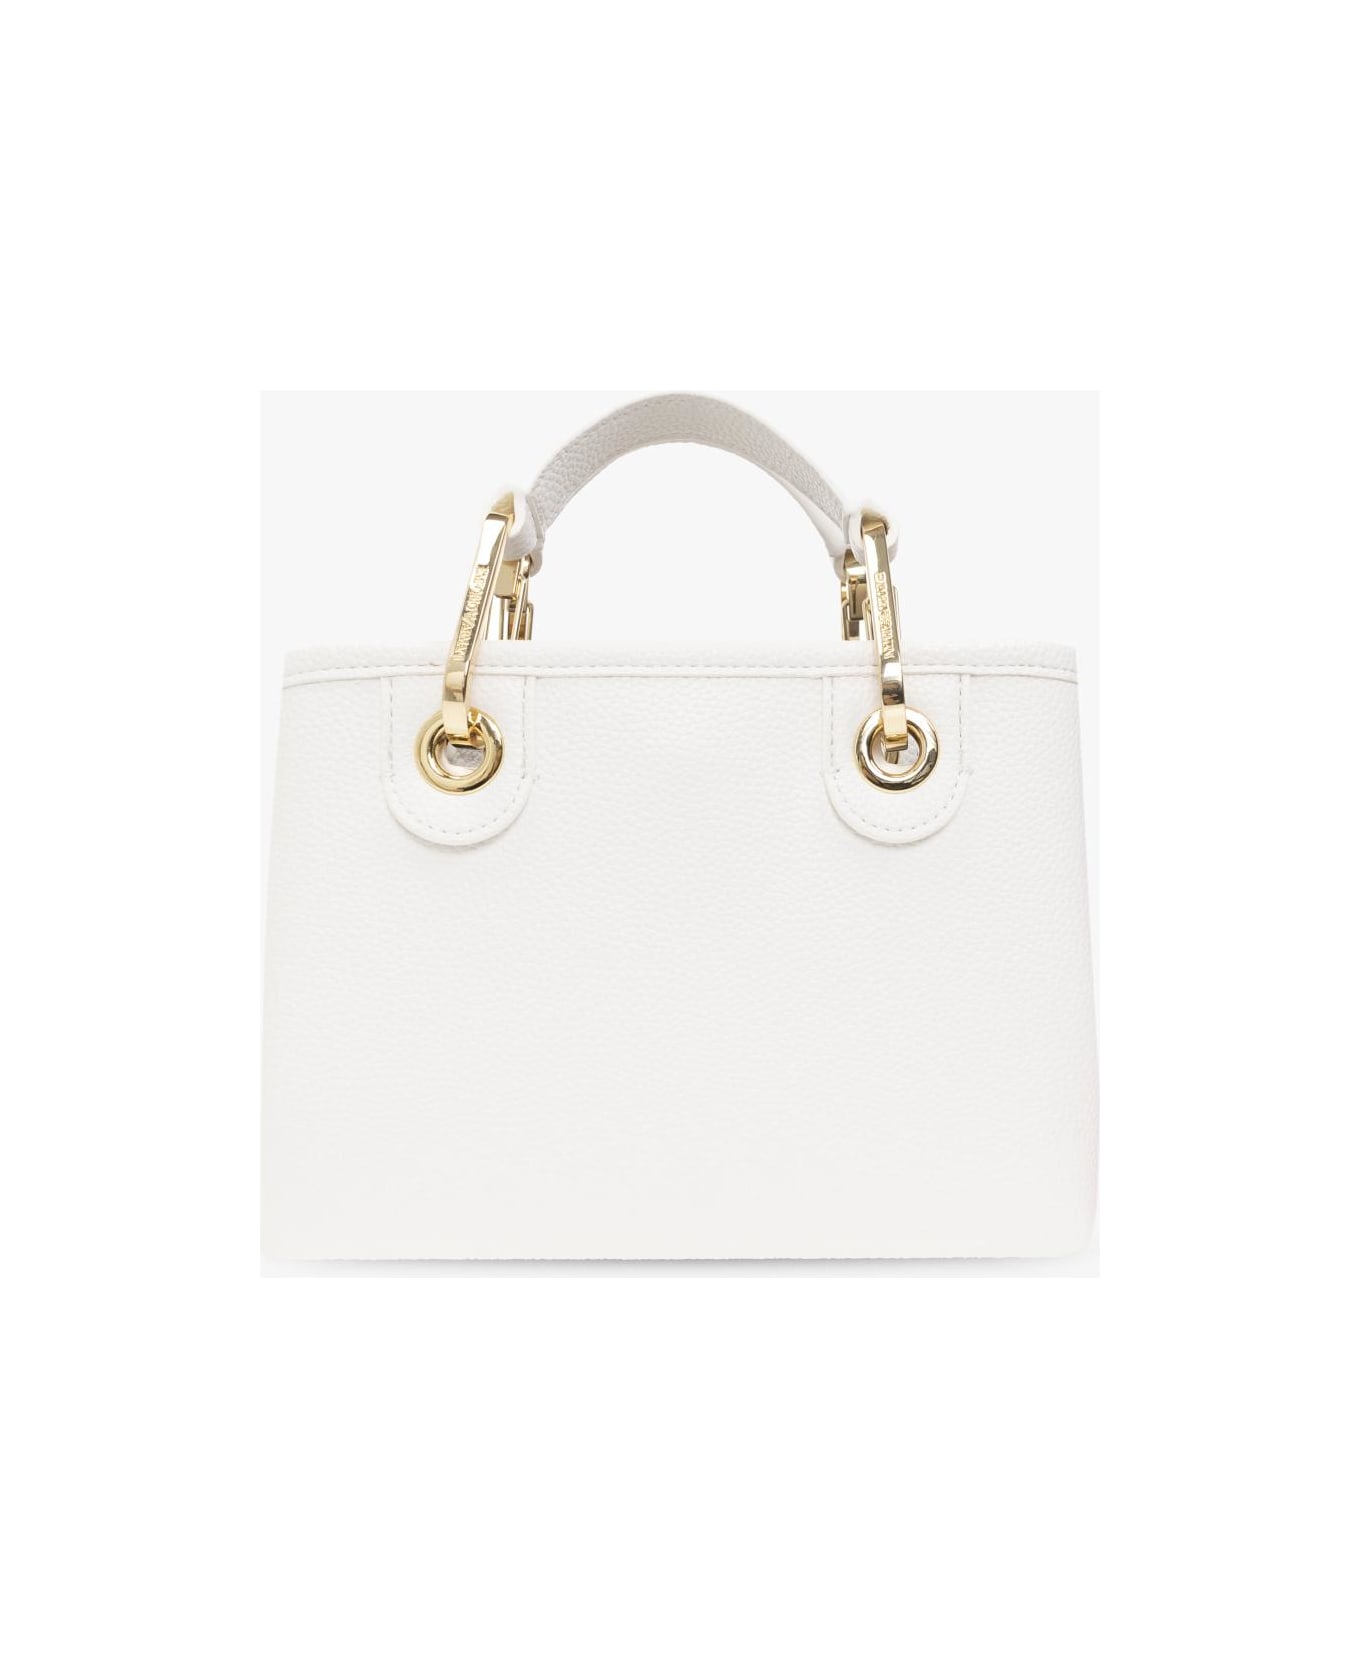 Emporio Armani 'myea Mini' Shoulder Bag - White